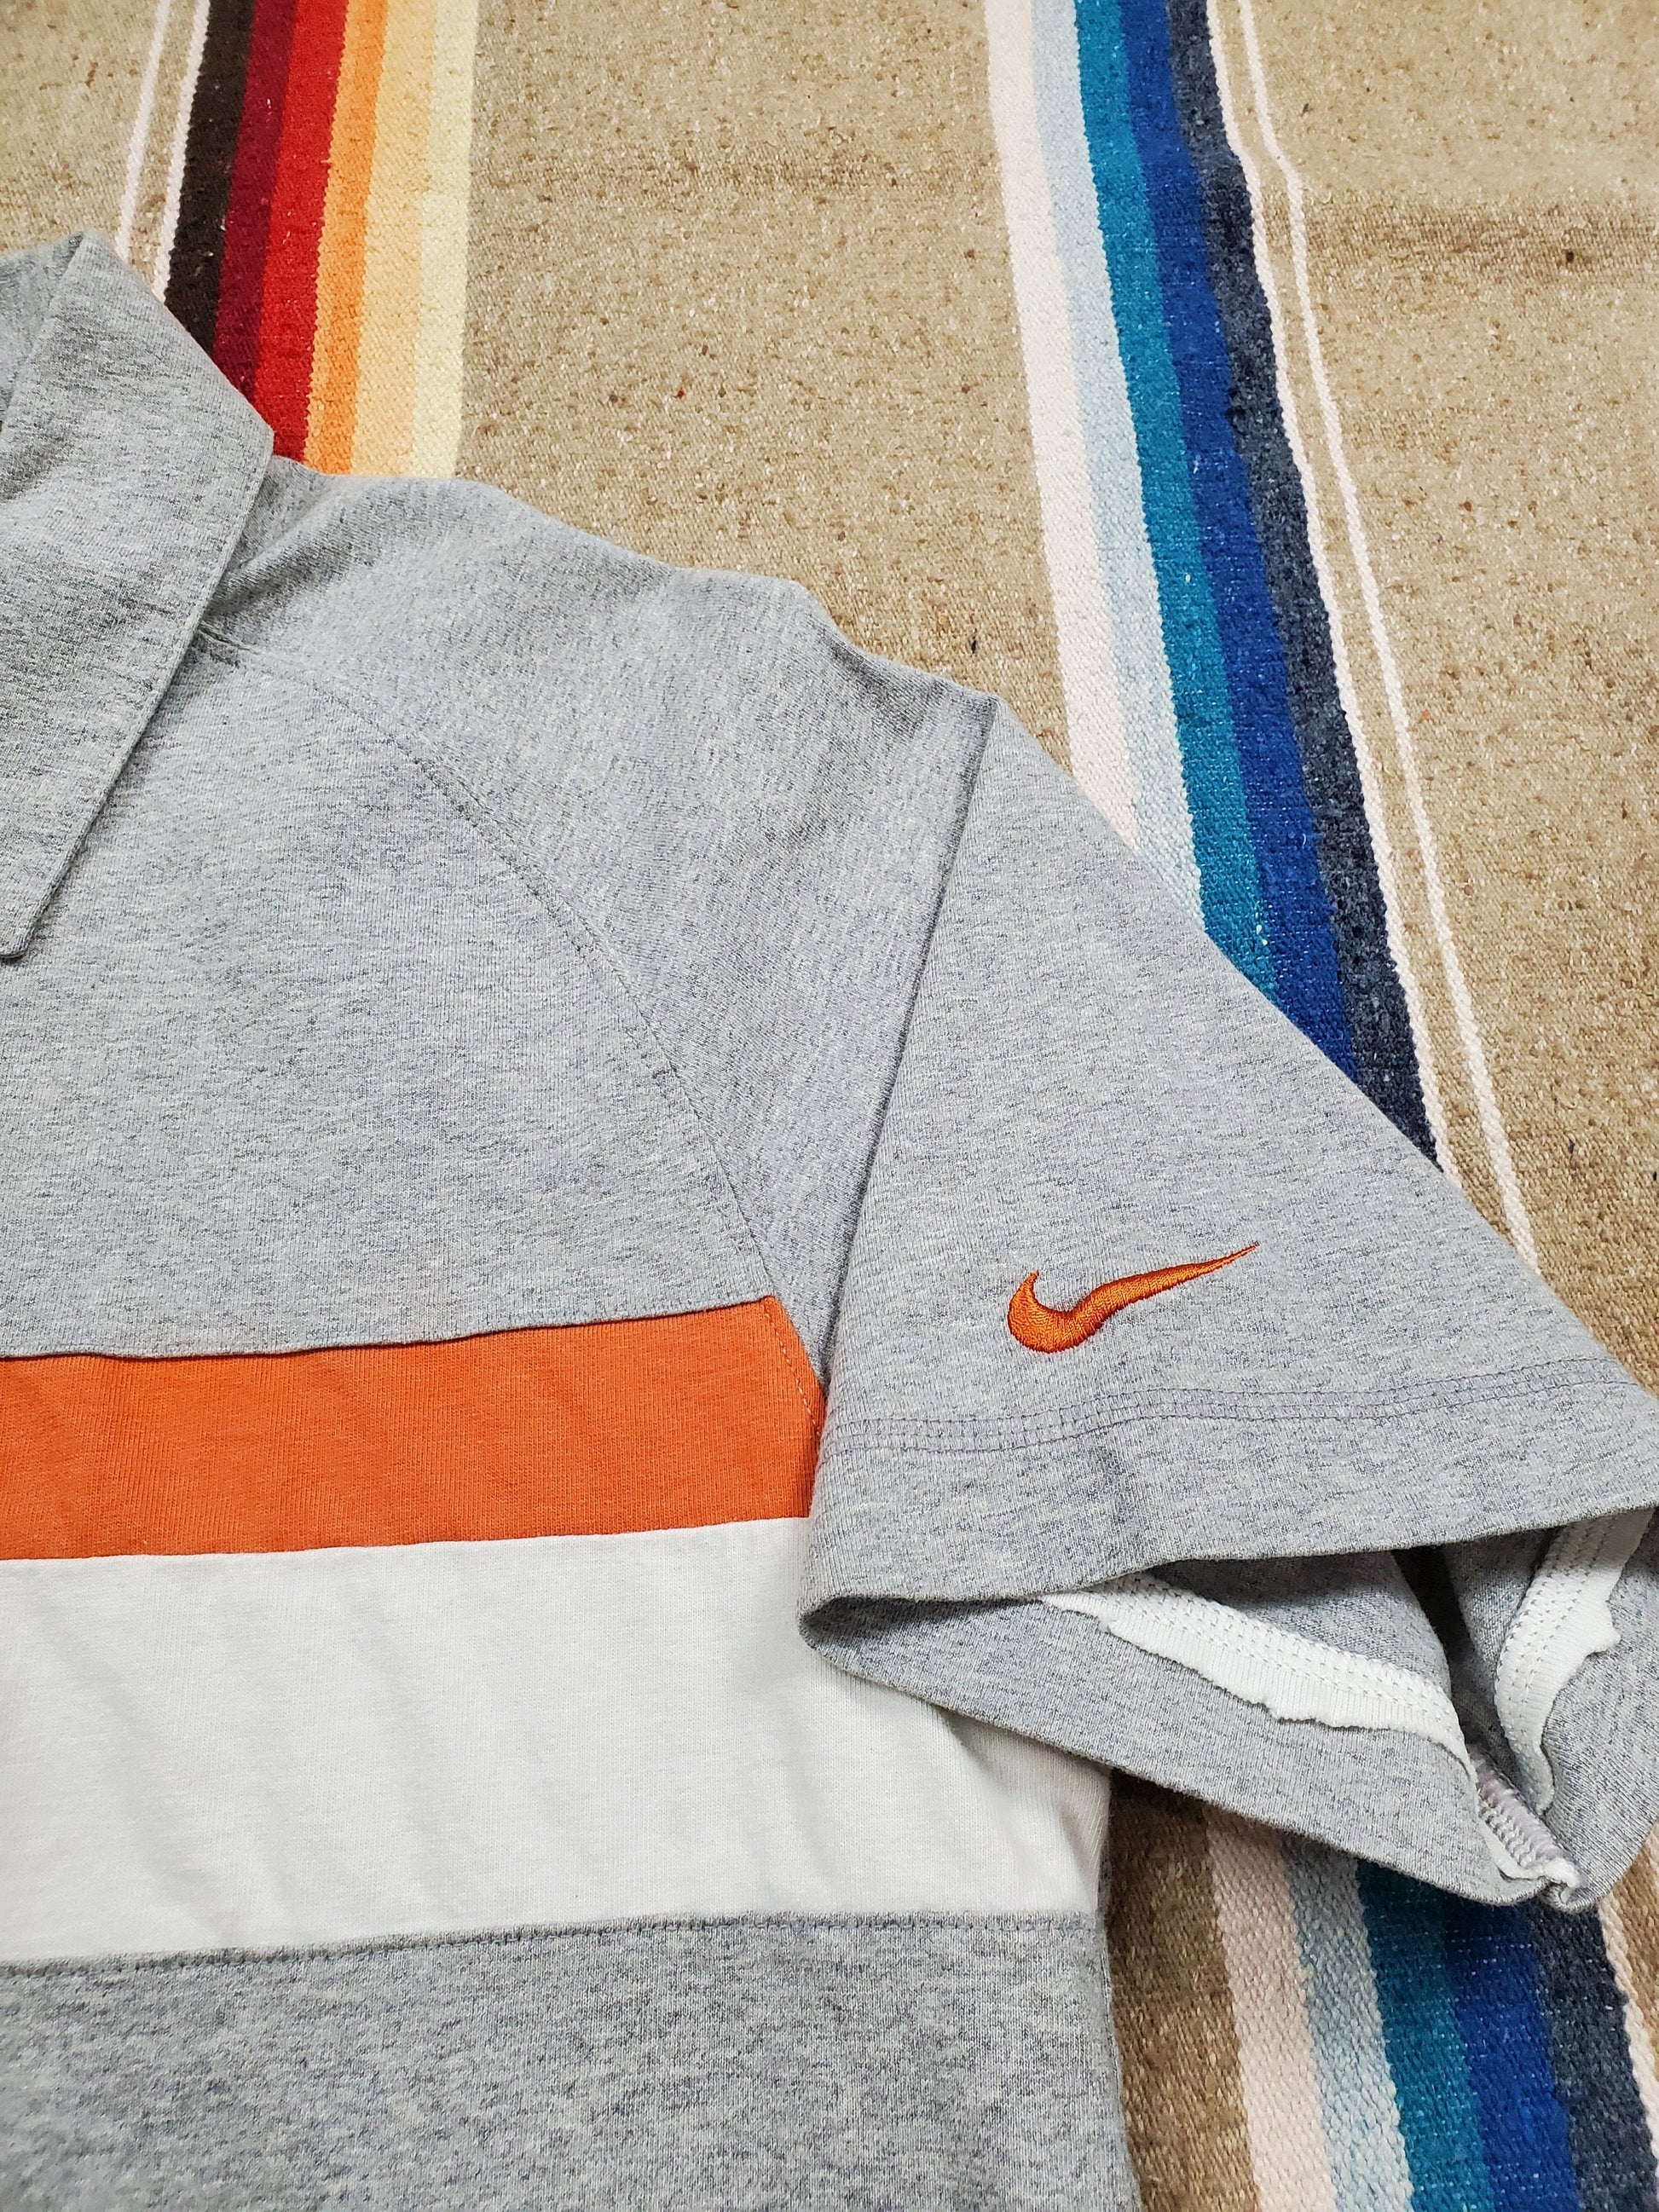 2000s 2006 Nike Polo Shirt Size M